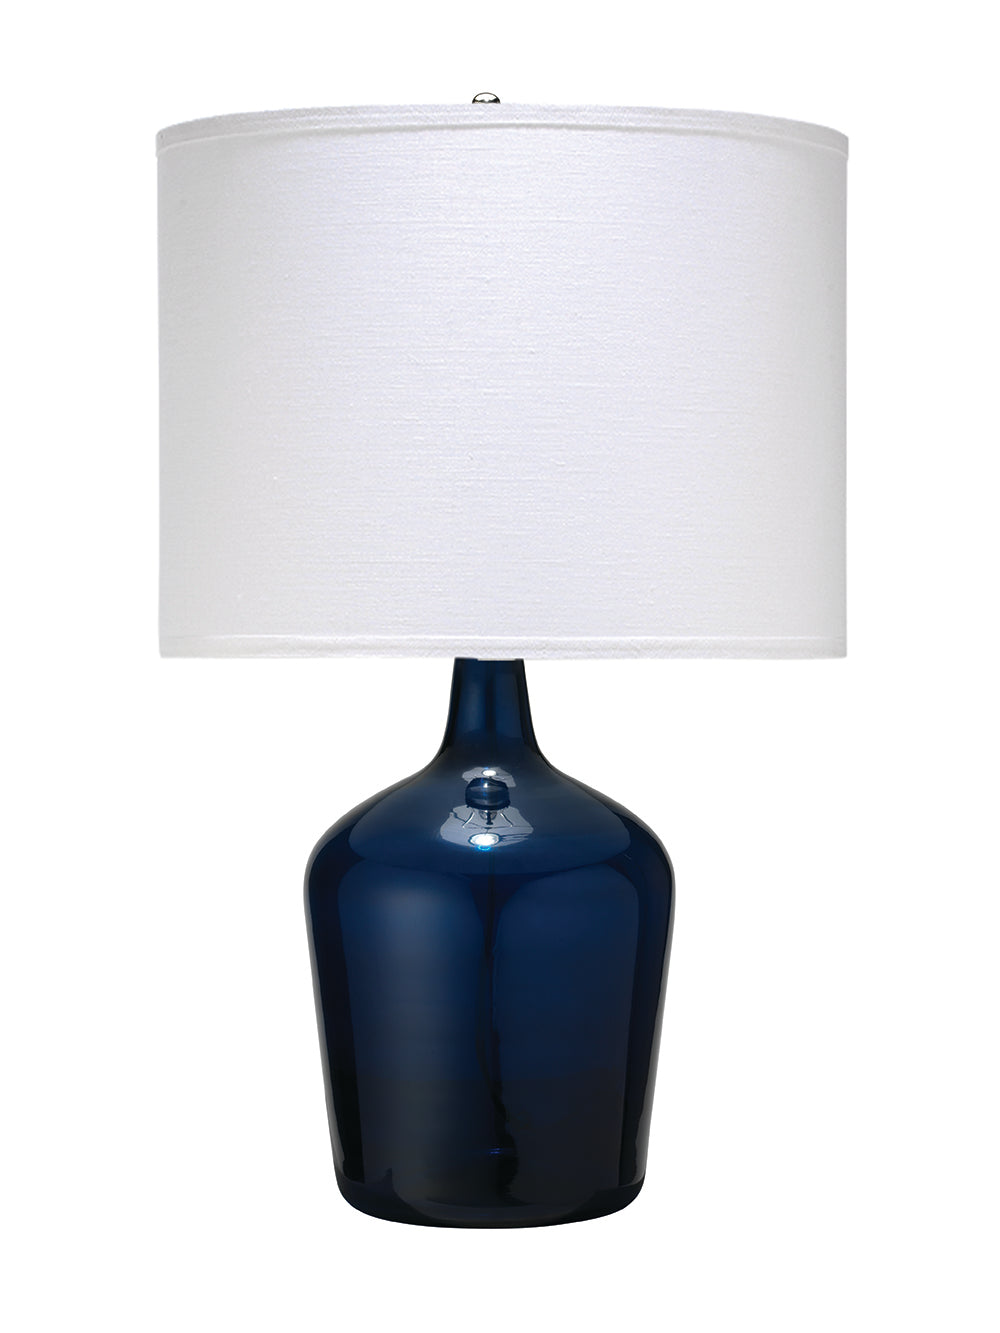 Plum Jar Table Lamp, Medium in Navy Blue Glass with Classic Drum Shade in Raffia